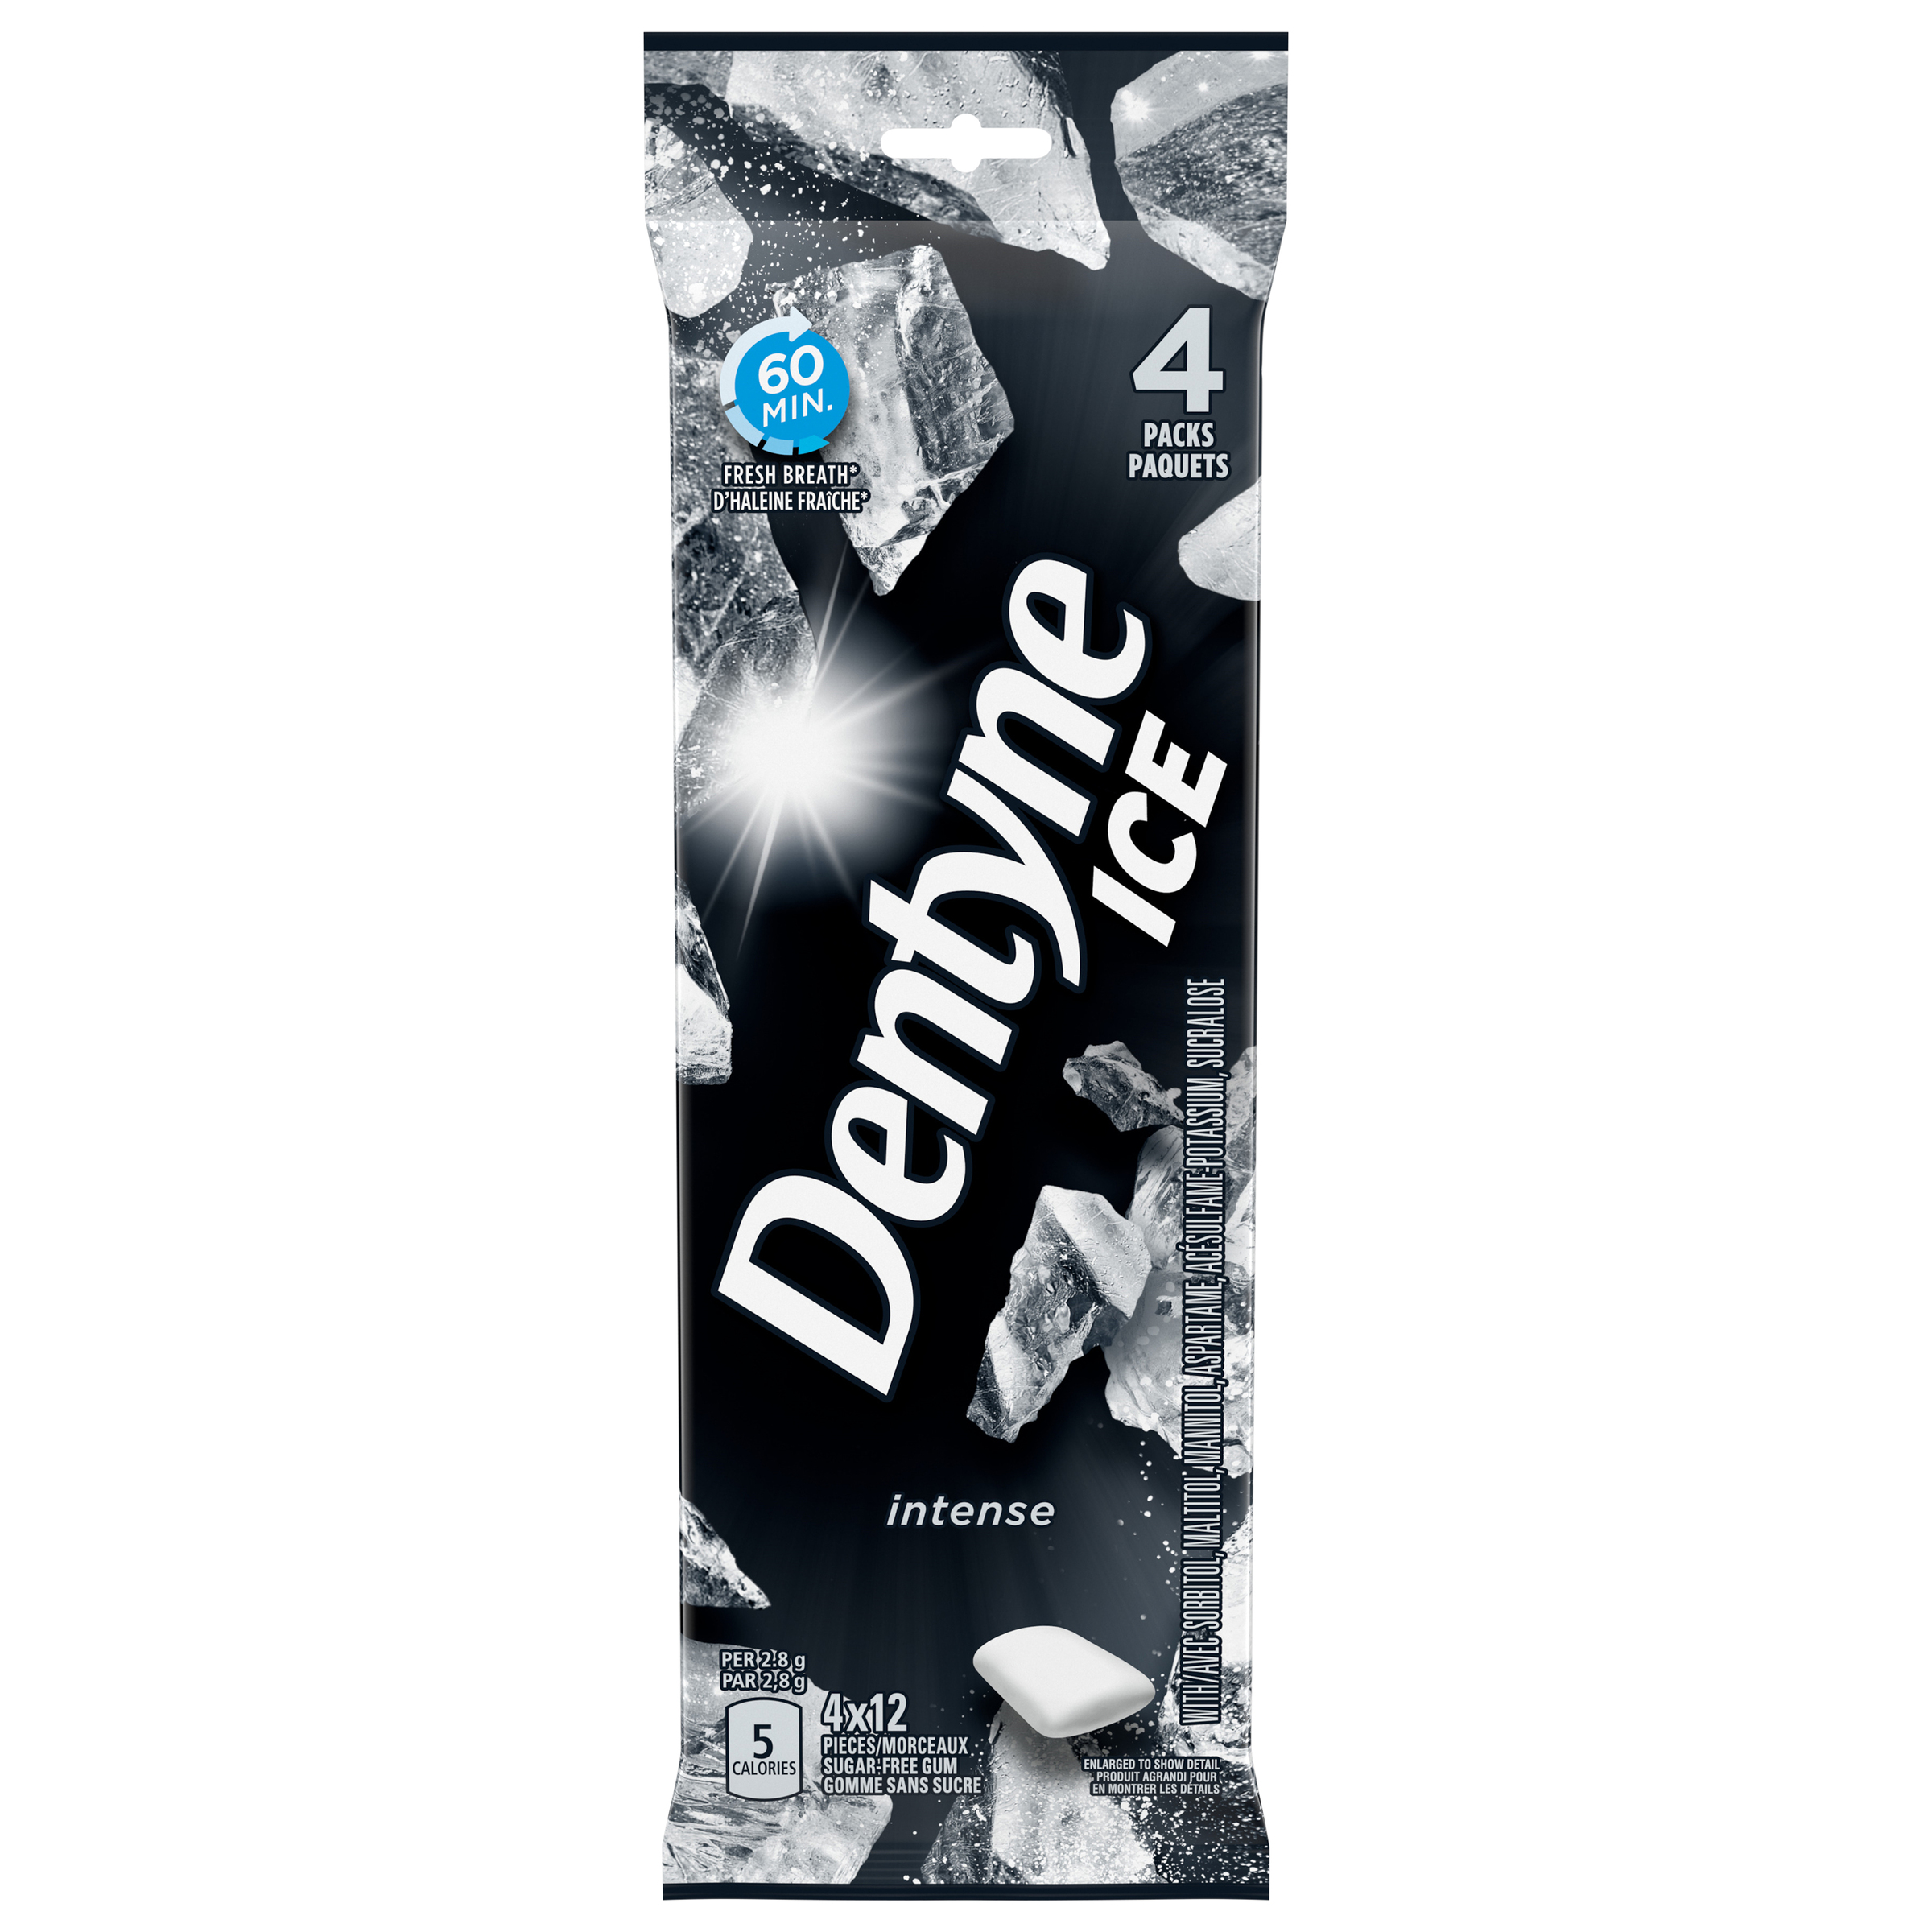 Dentyne Ice Intense Gum 48 Count